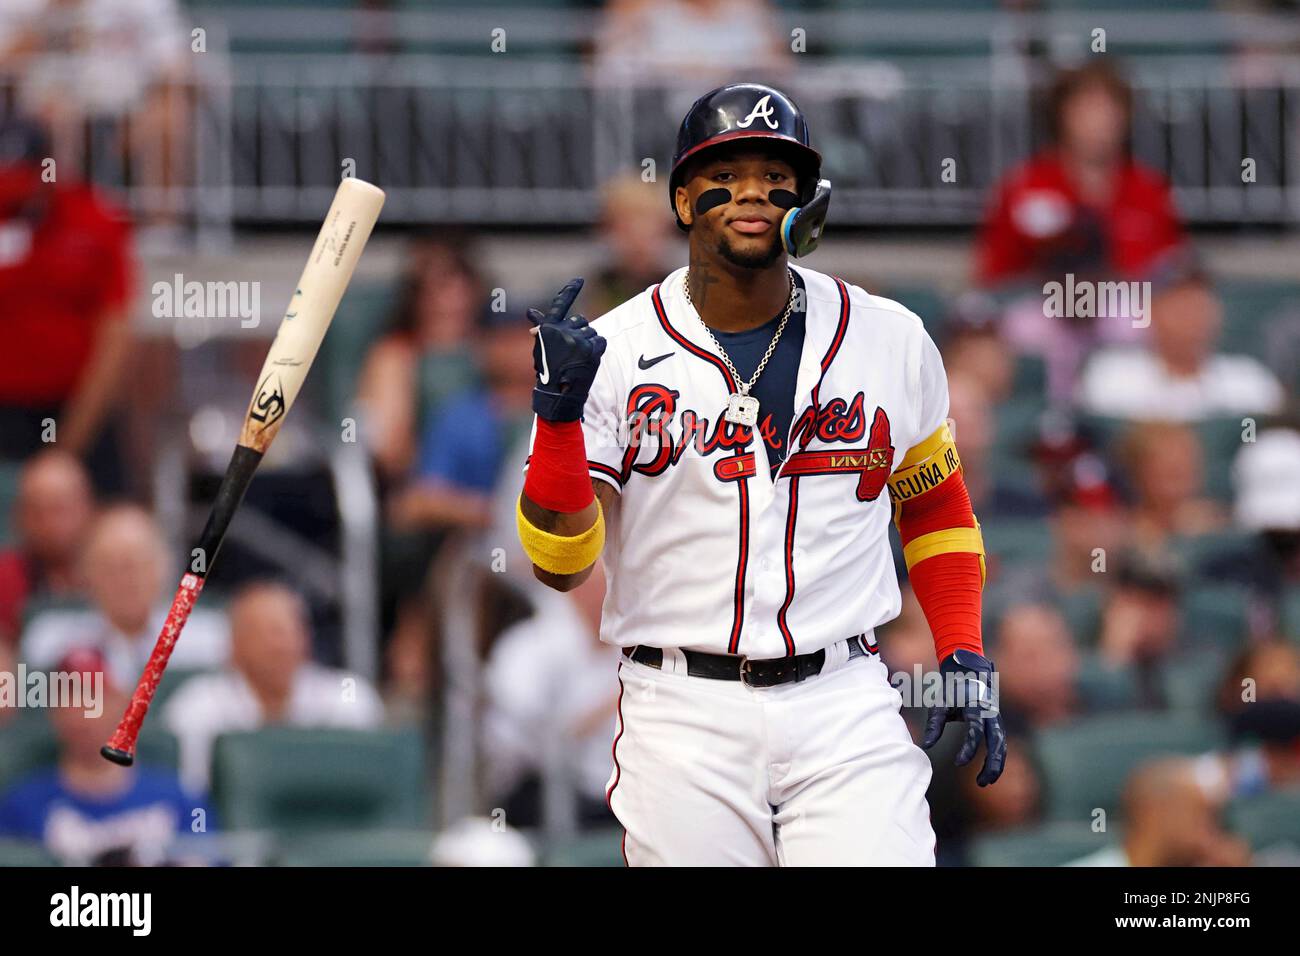 ATLANTA, GA - JULY 12: Atlanta Braves right fielder Ronald Acuna